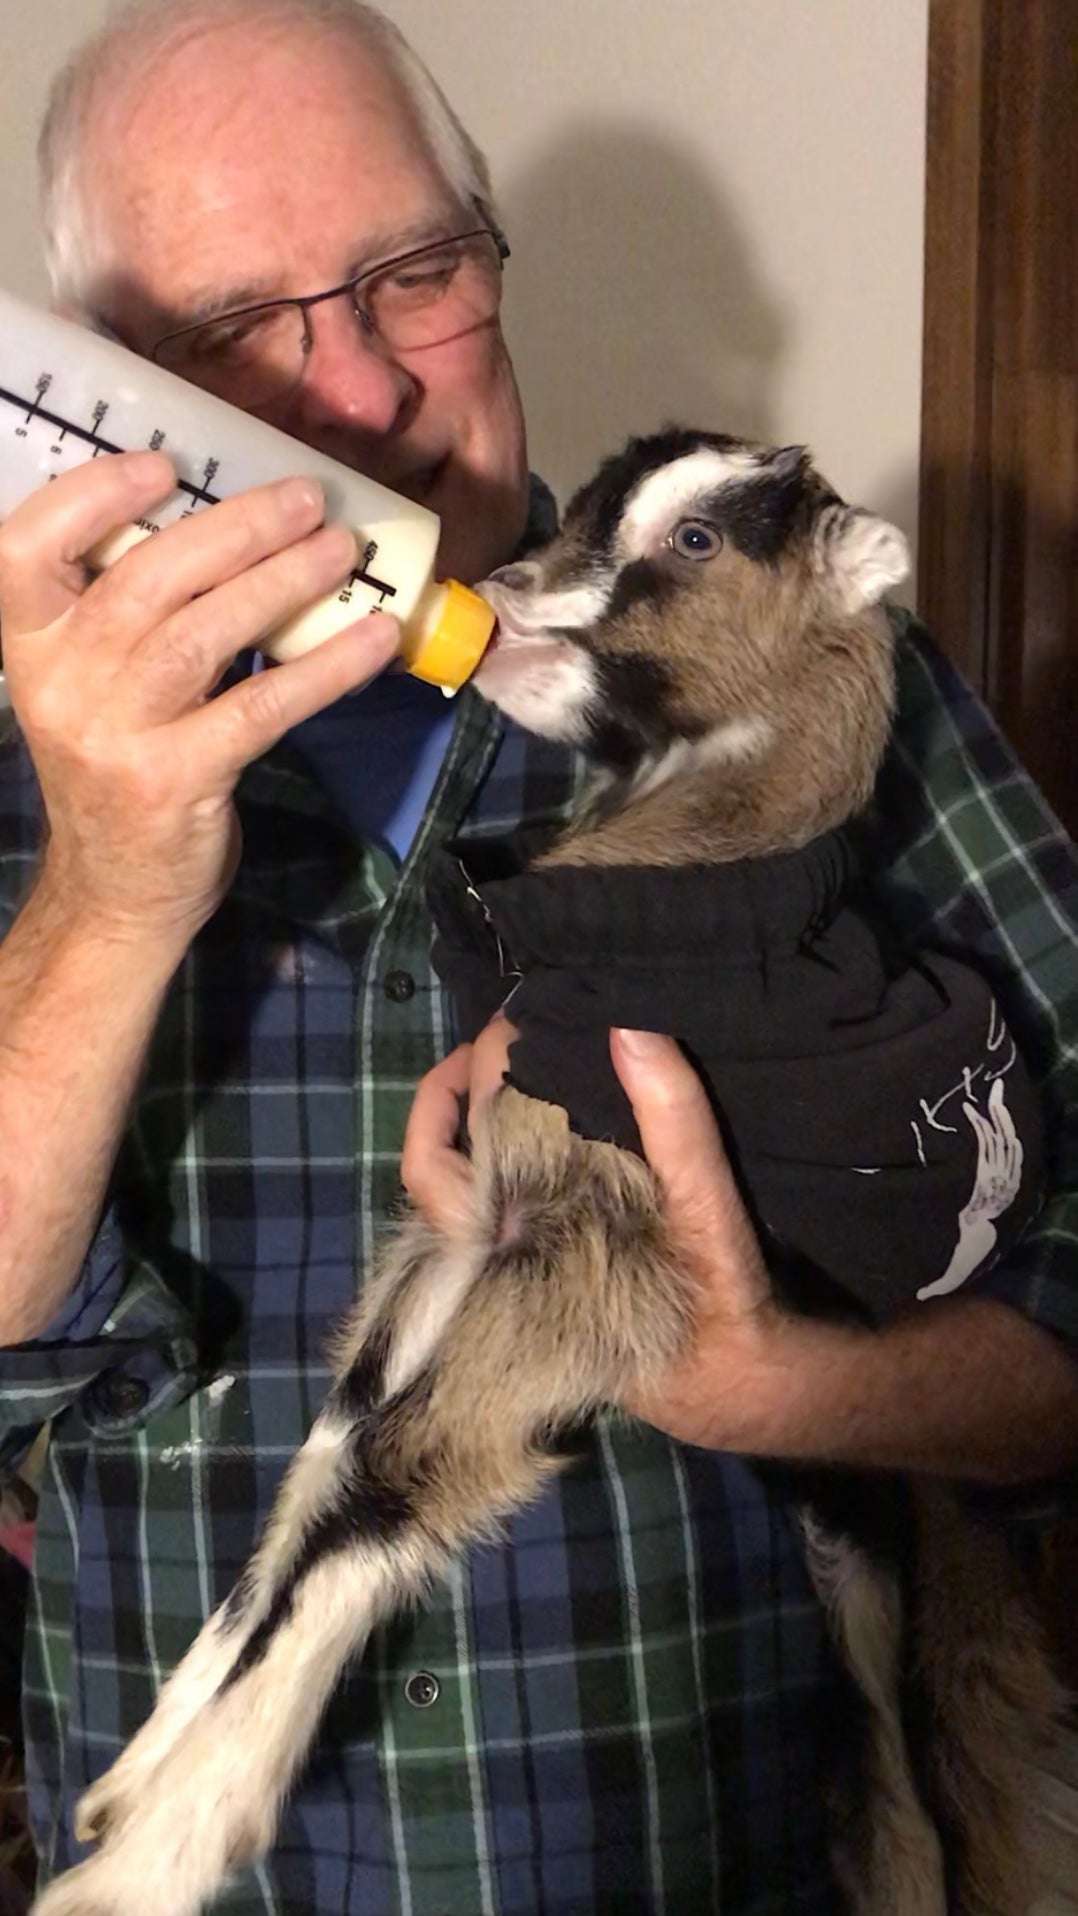 bottle feeding baby goat